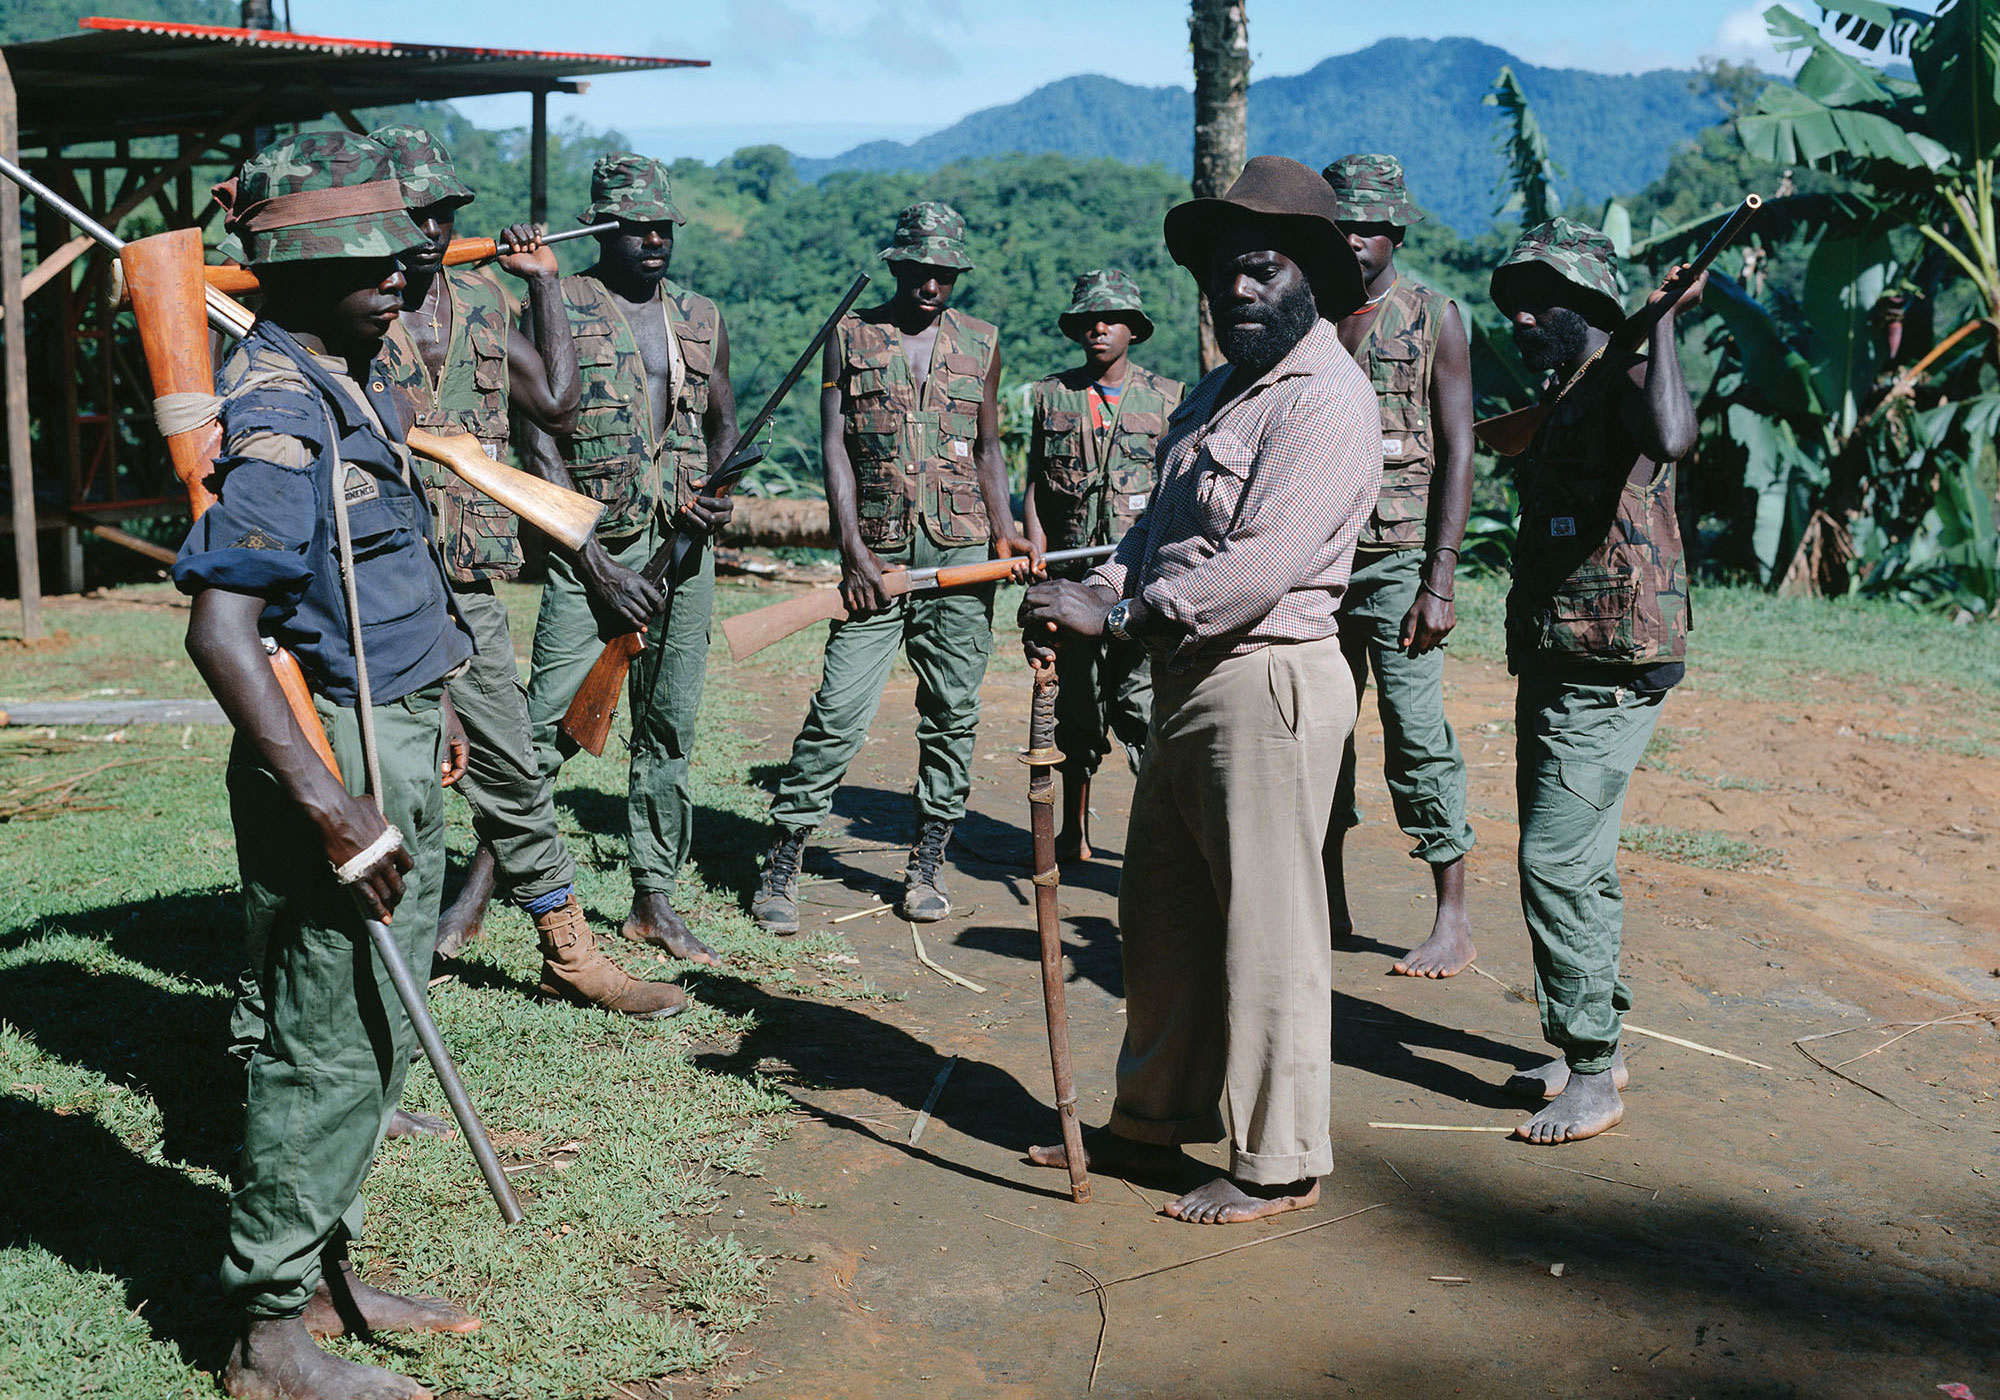 BRA leader Francis Ona (holding a samurai sword) and some of his men at Guava village, 1994. Photographer: Ben Bohane. Collection of the Australian War Memorial.